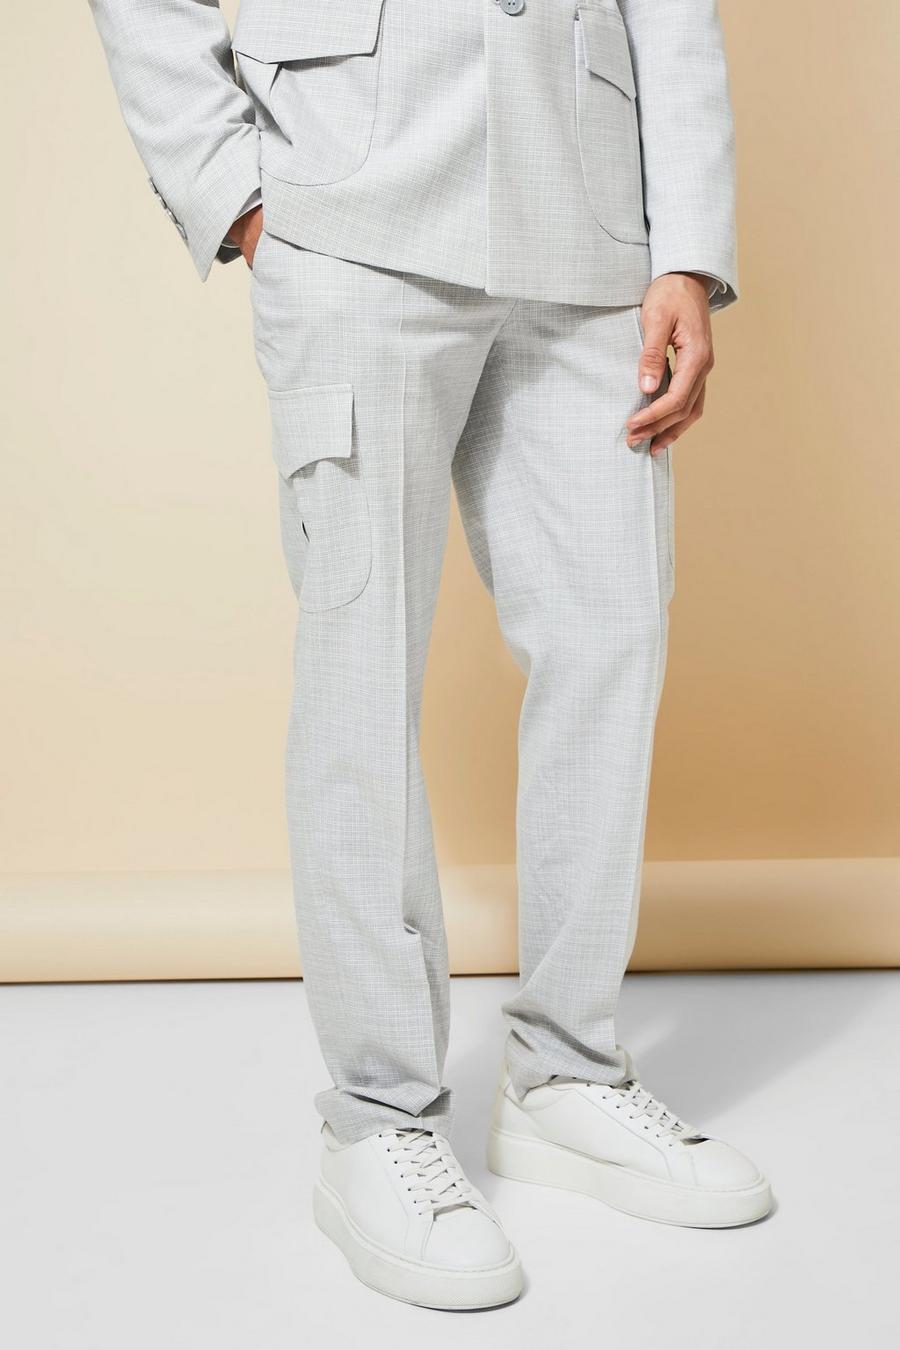 Pantaloni completo Slim Fit stile Cargo, Grey grigio